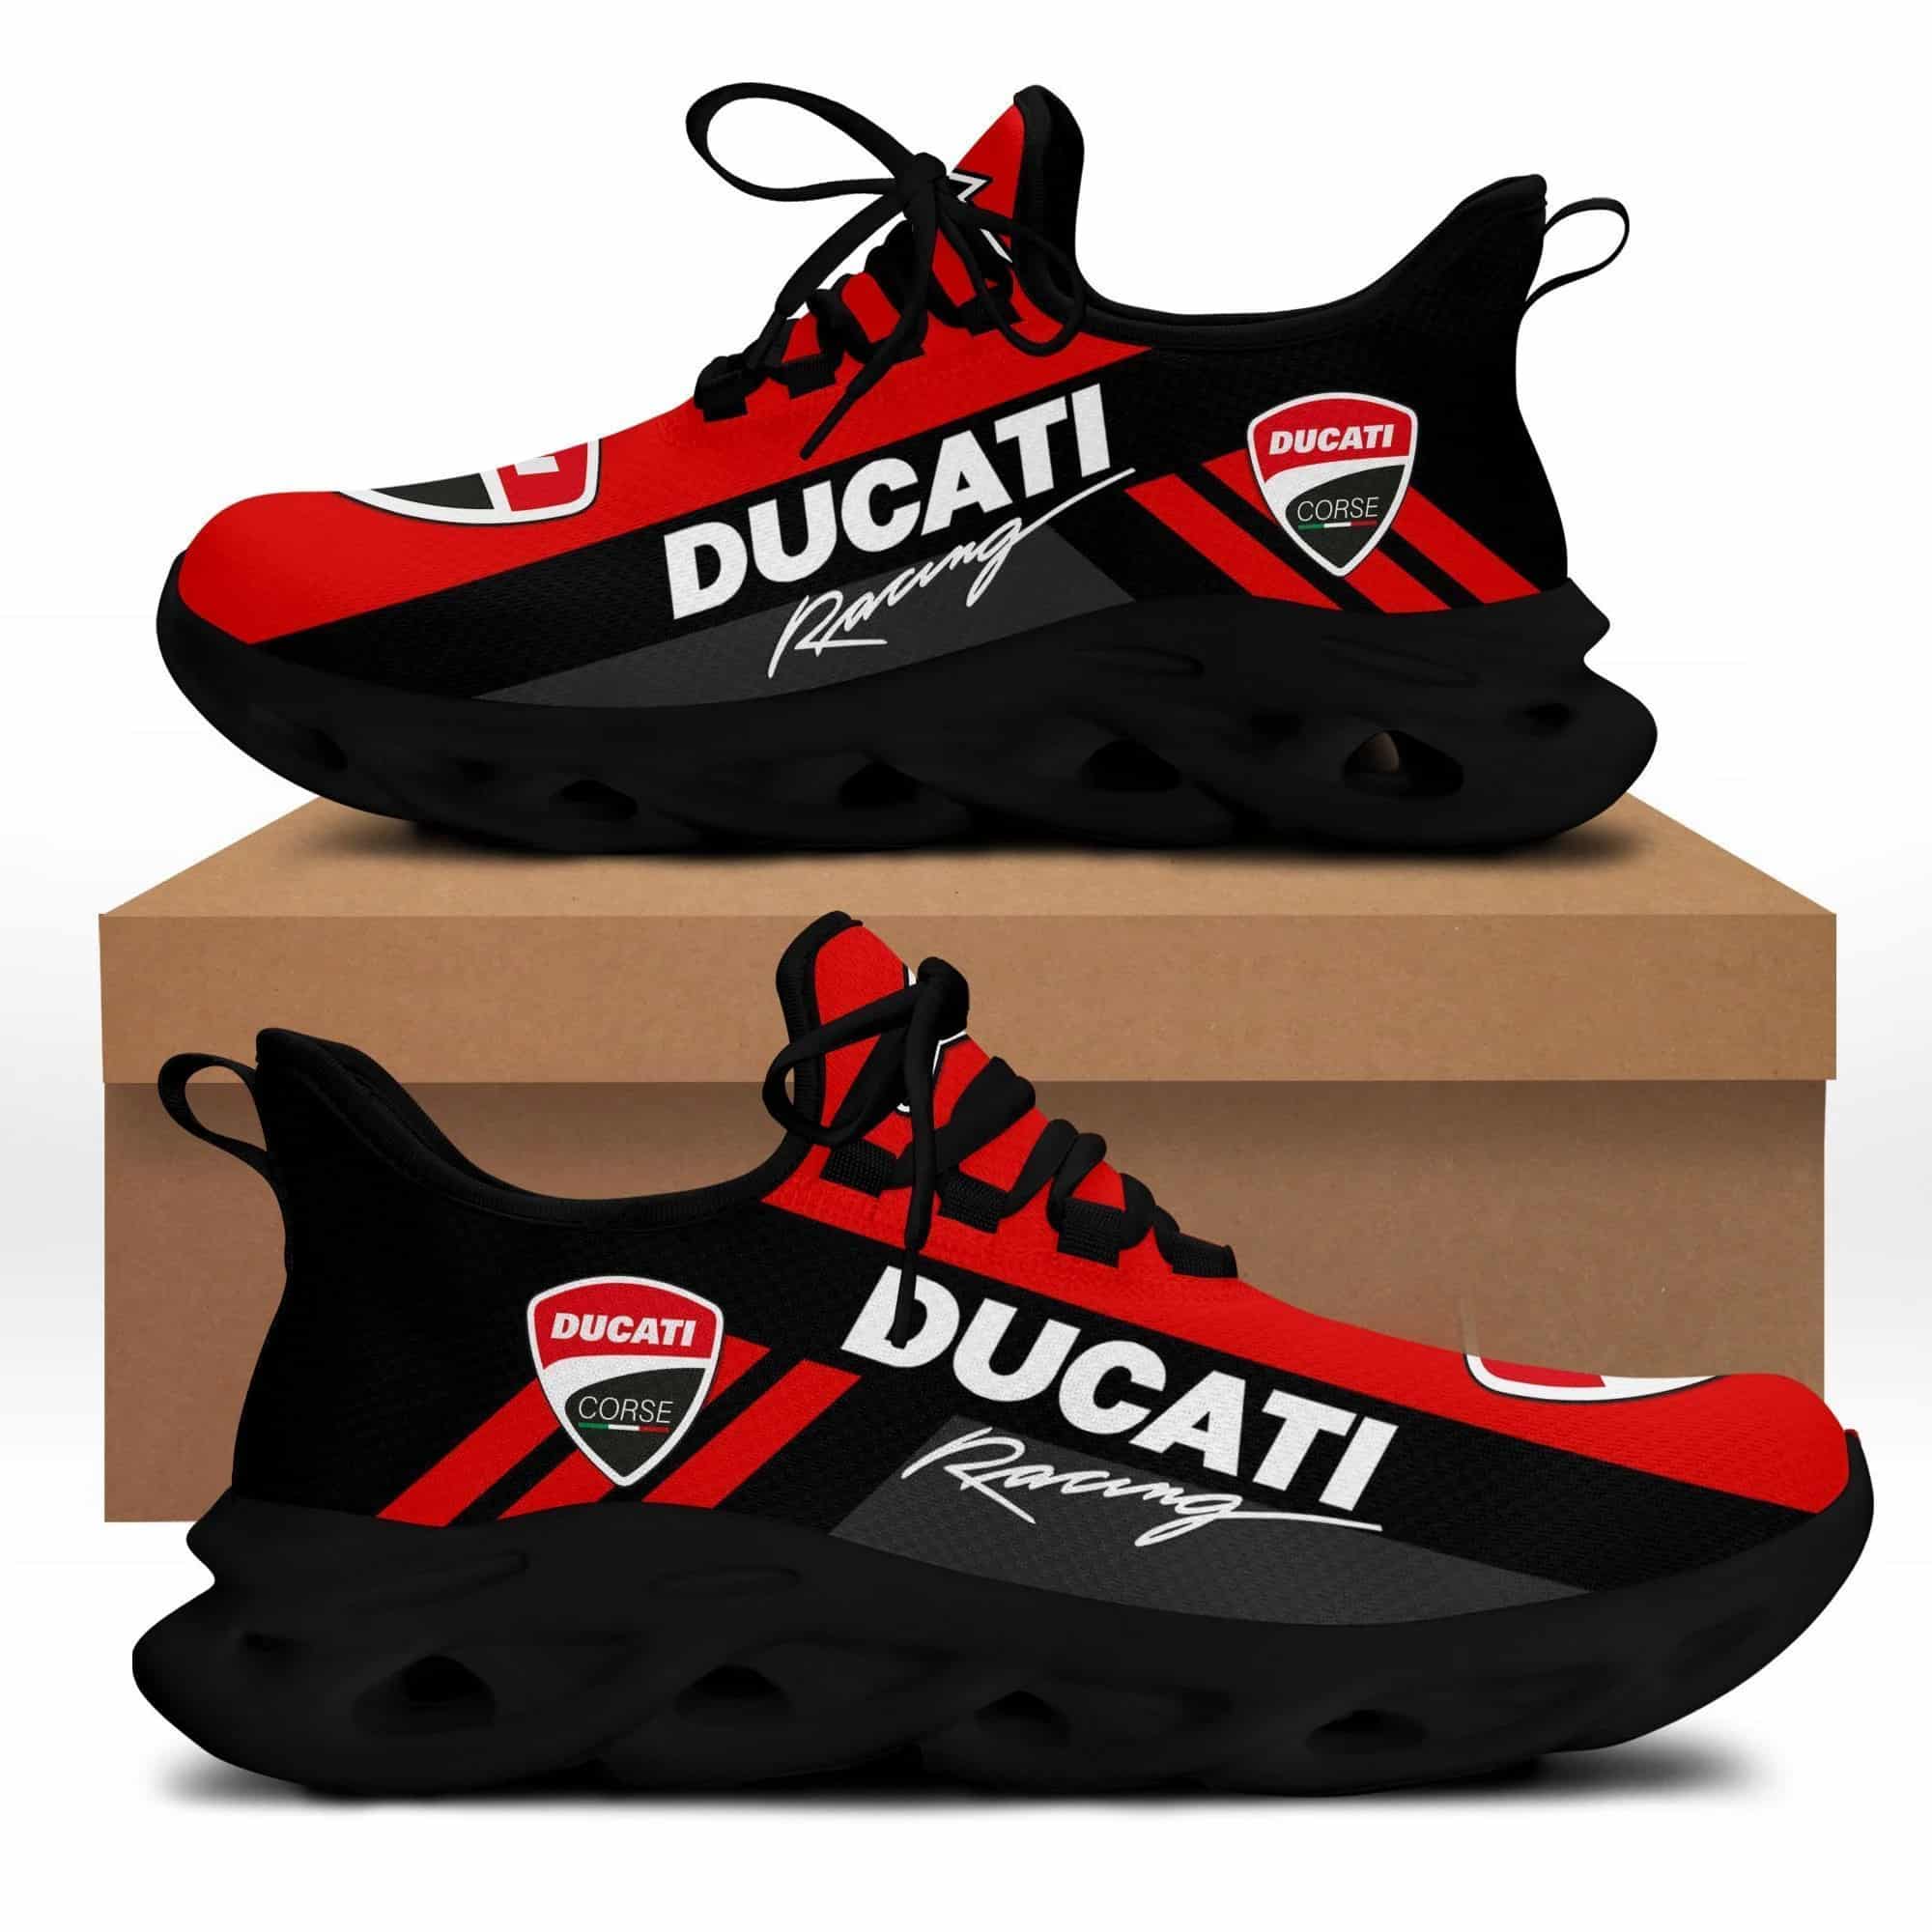 Ducati Racing Running Shoes Max Soul Shoes Sneakers Ver 3 1